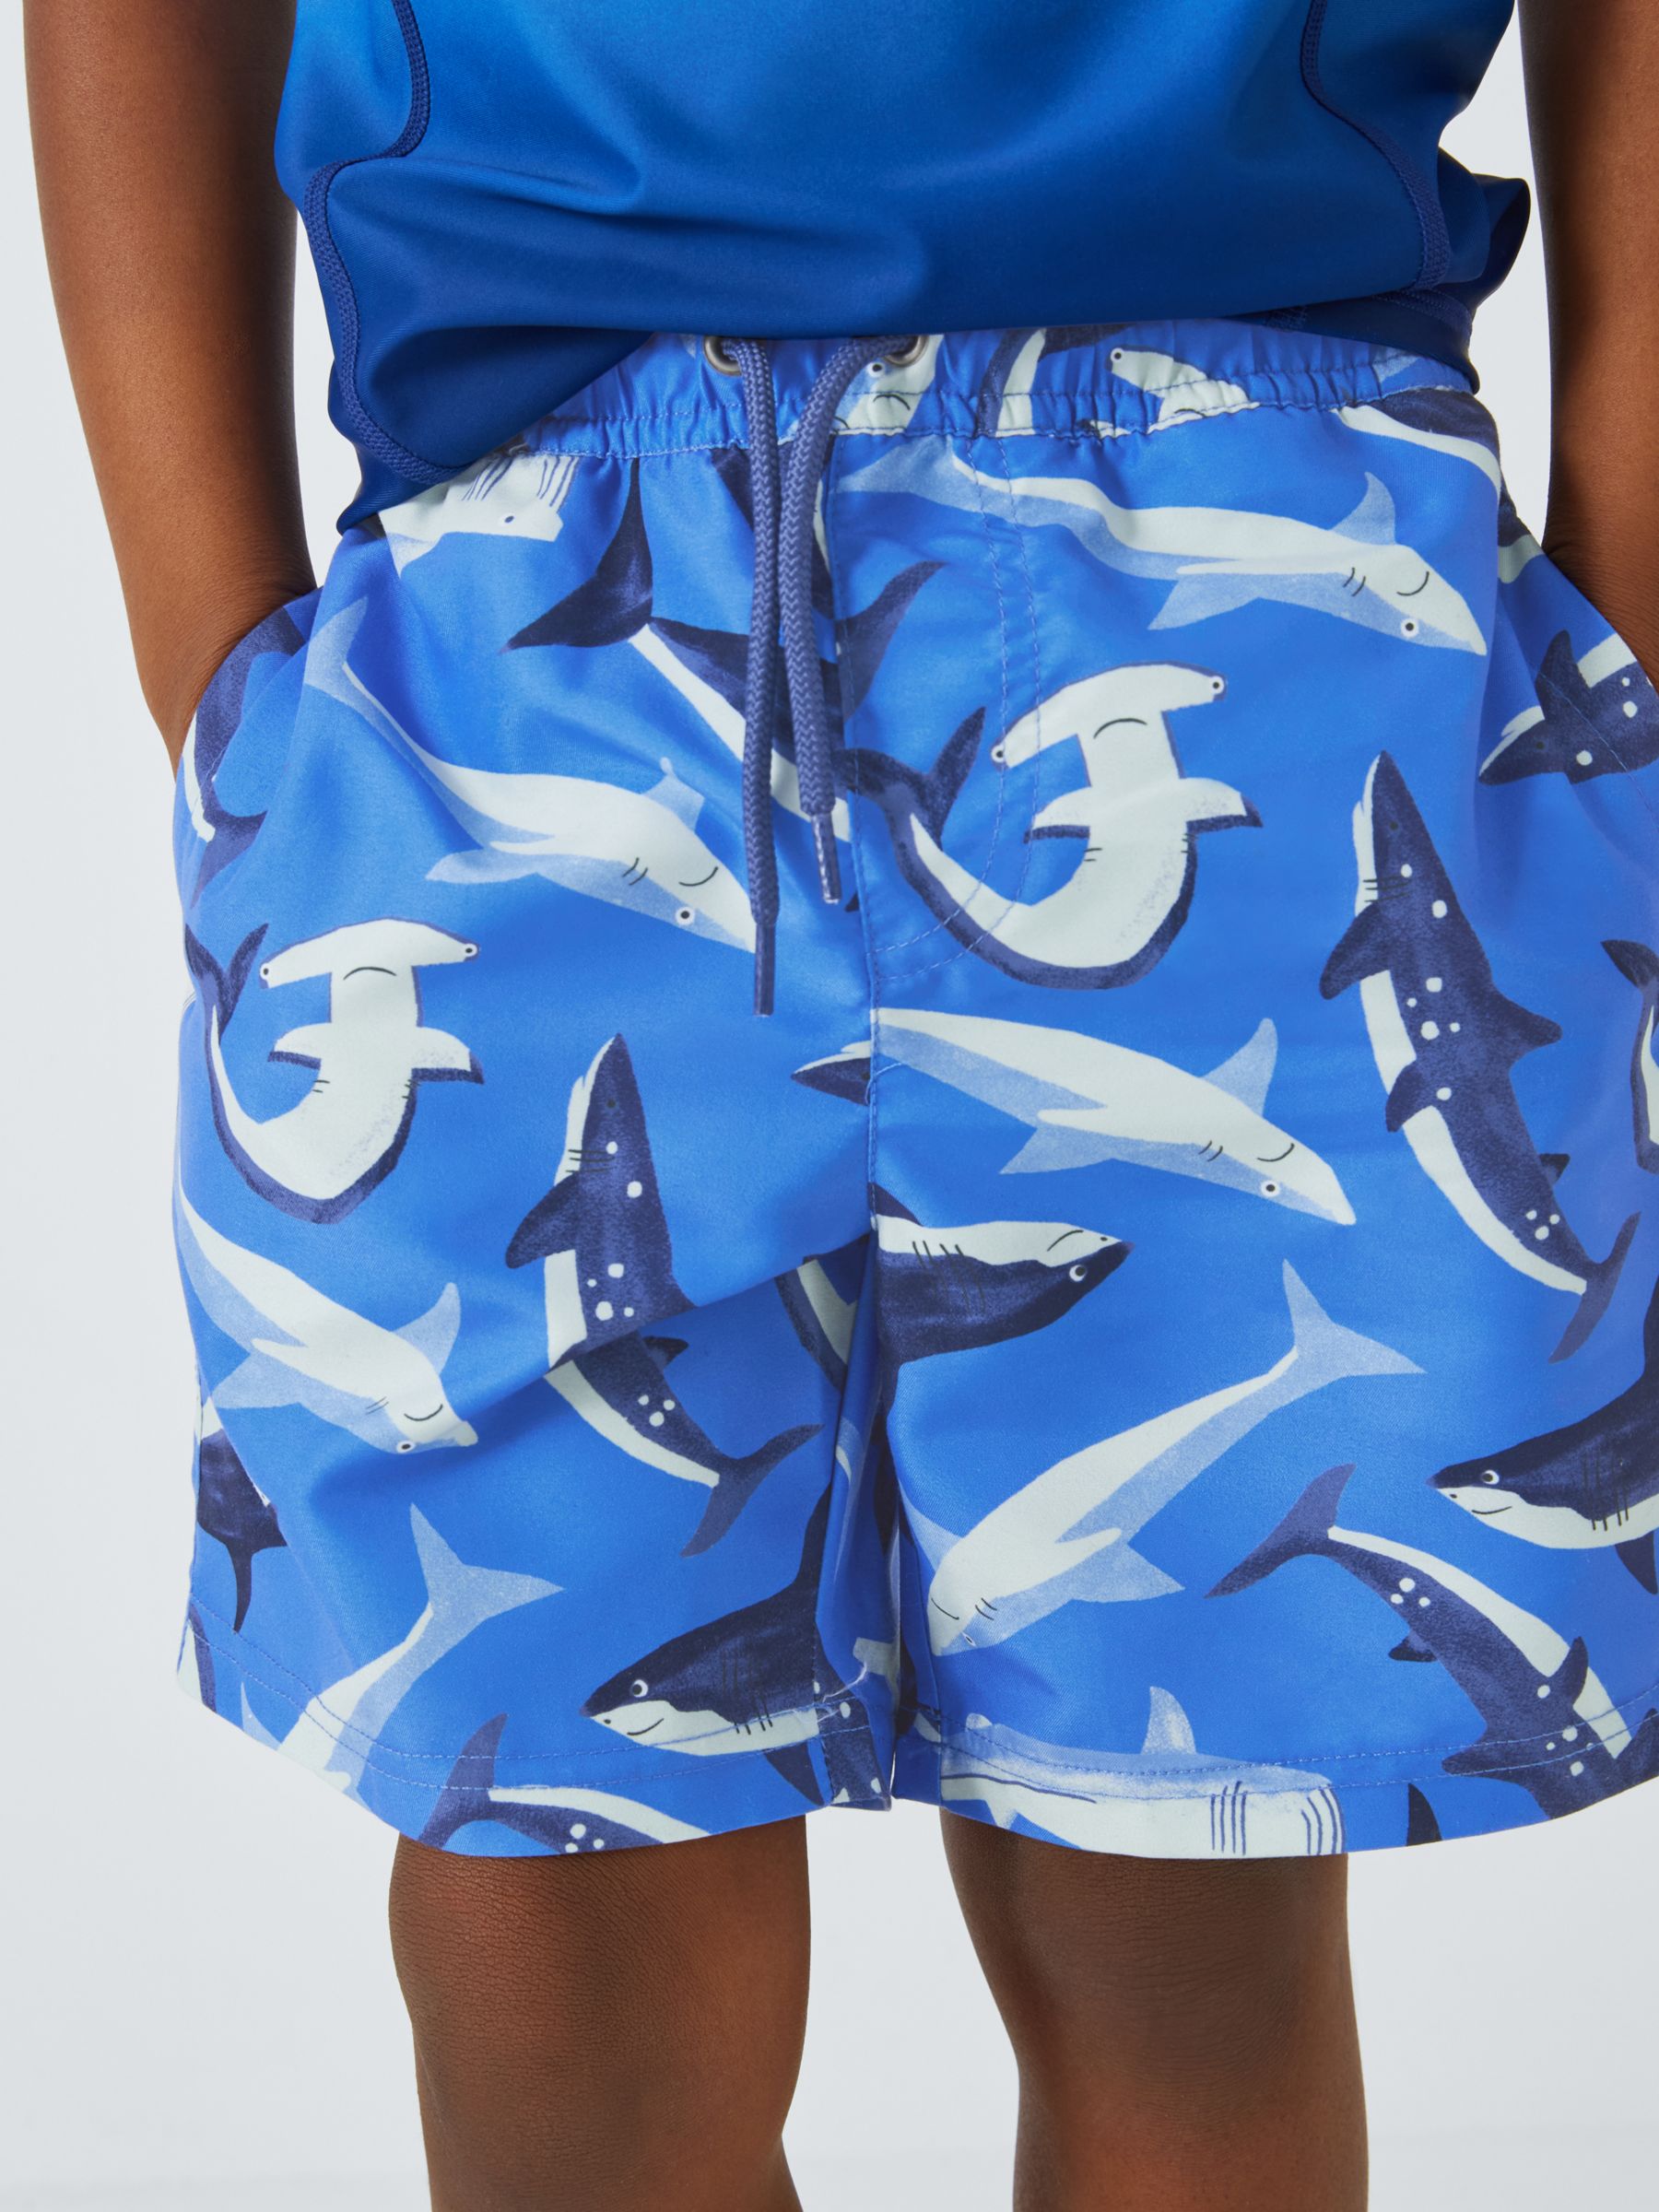 John Lewis Kids' Shark Print Swim Shorts, Blue/Multi, 9 years